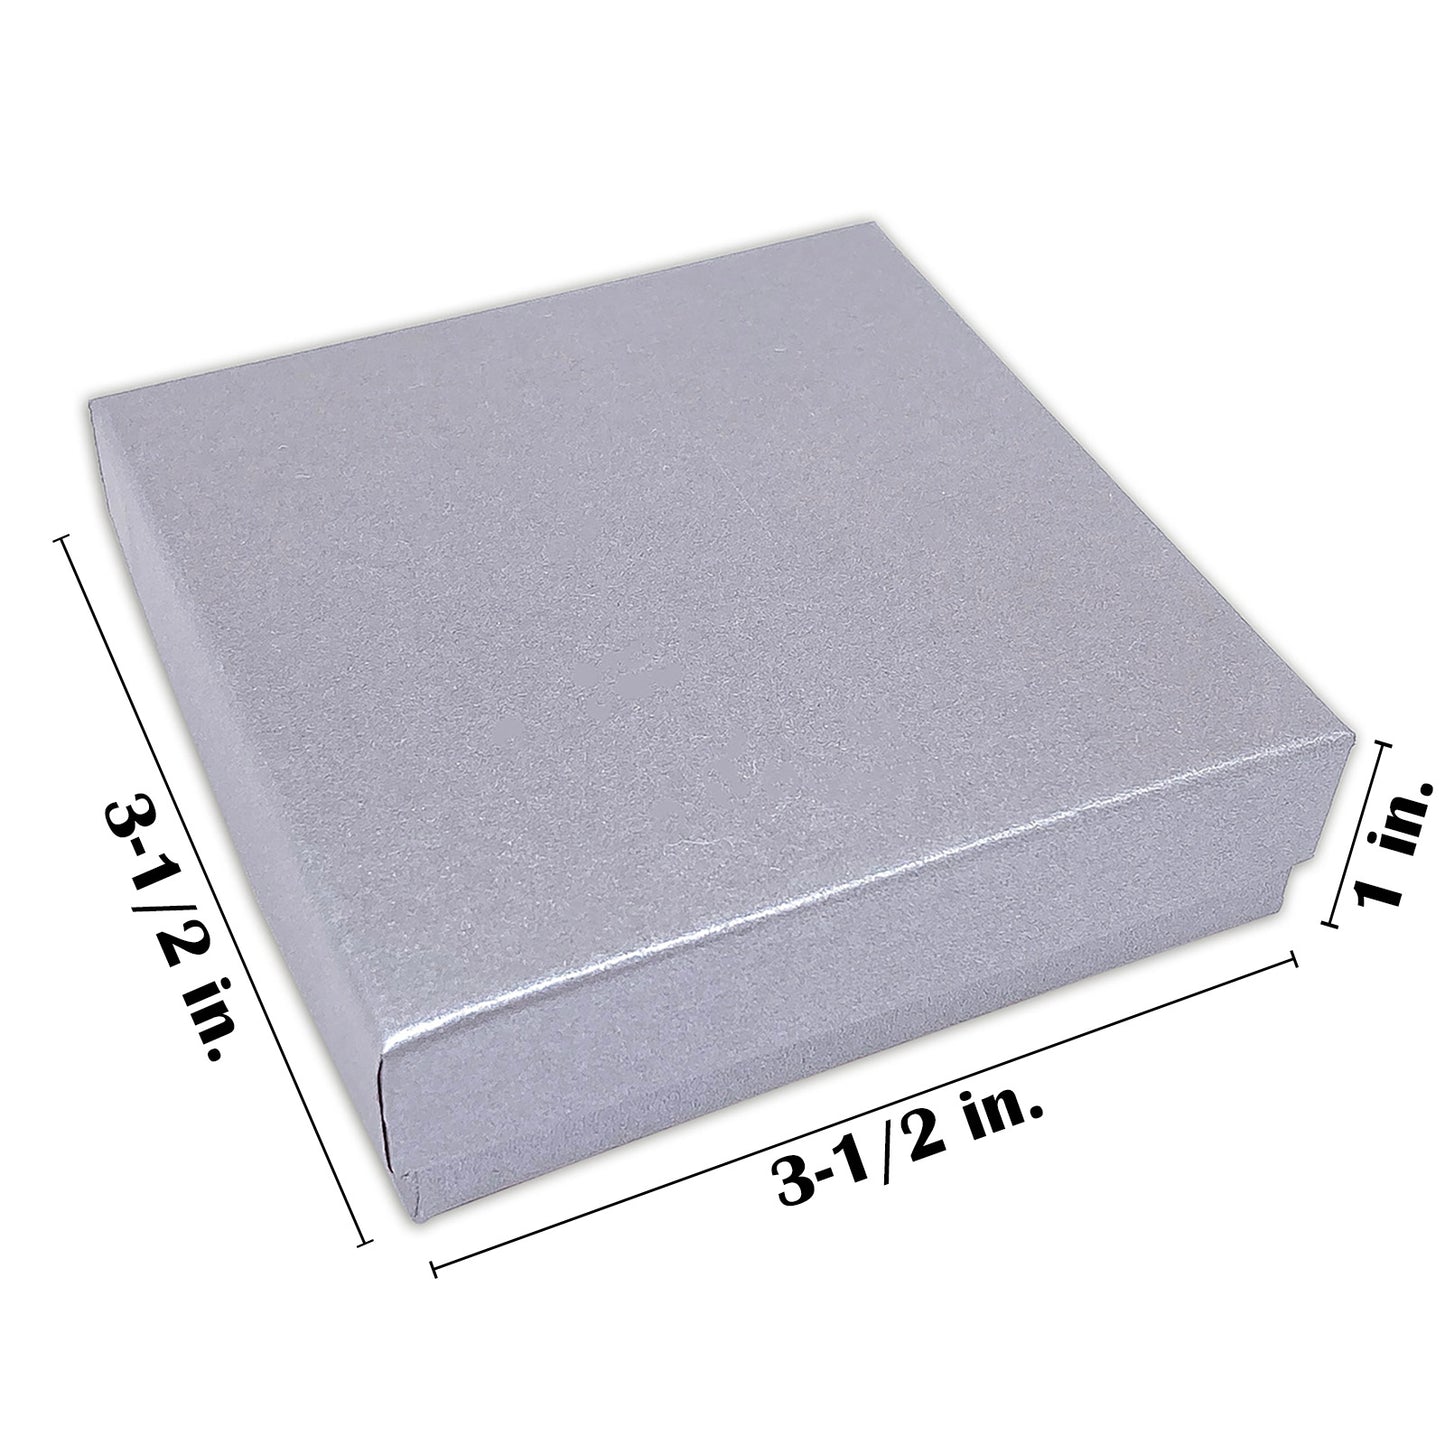 3 1/2" x 3 1/2" x 1" Pearl Gray Cotton Filled Paper Box